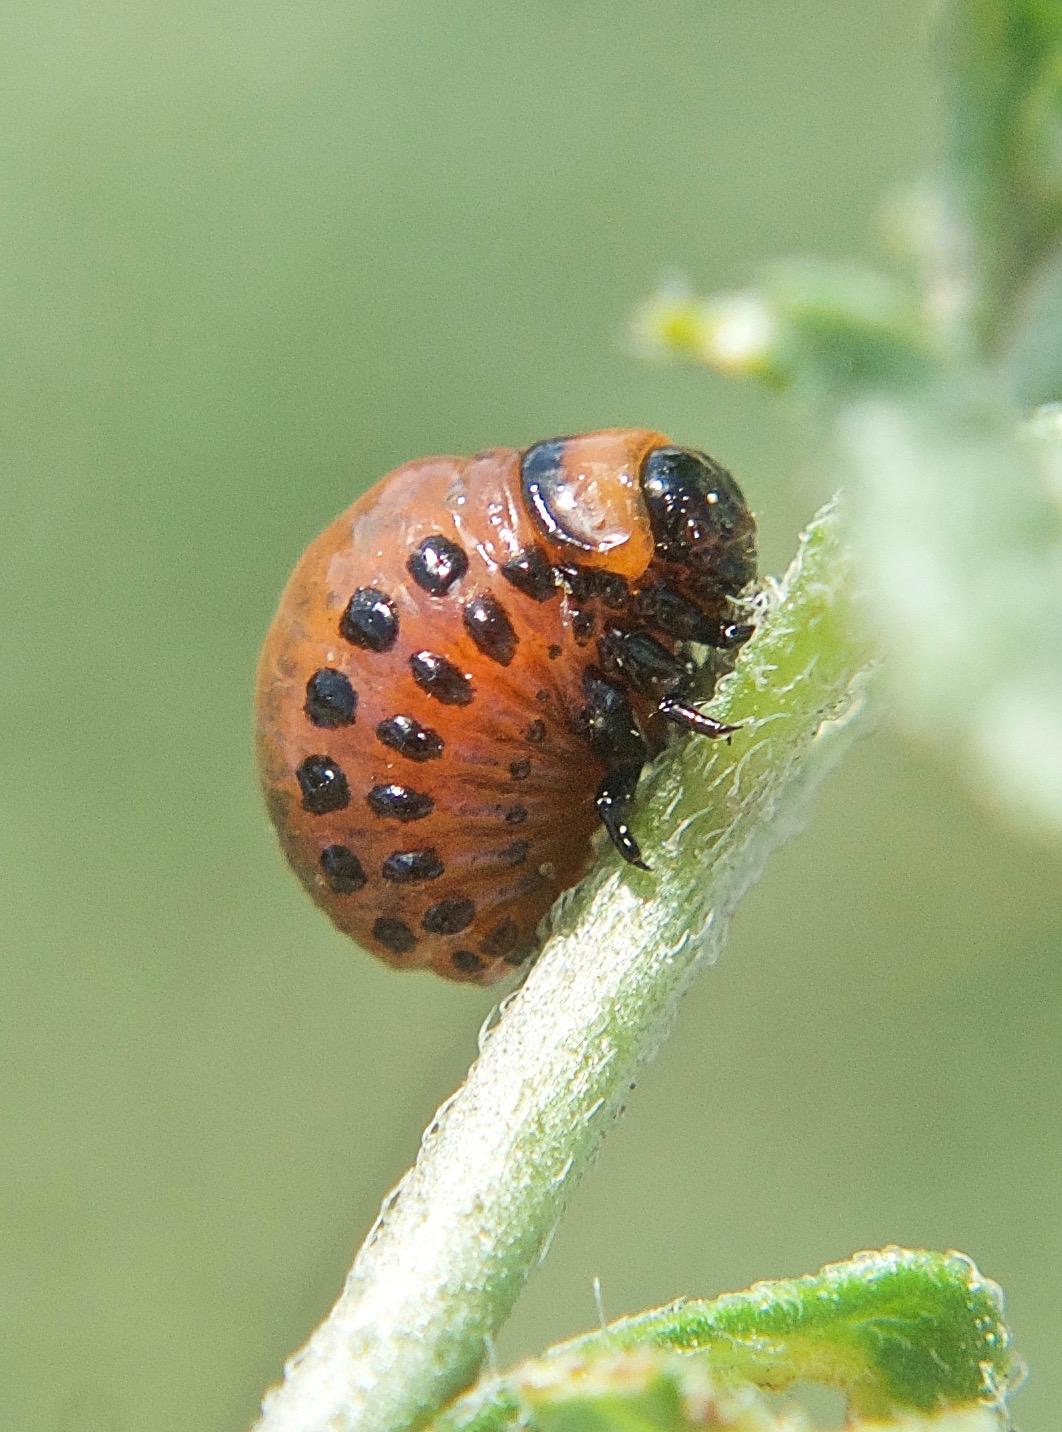 Colorado Potato Bug Larva on Cutleaf Nightshade